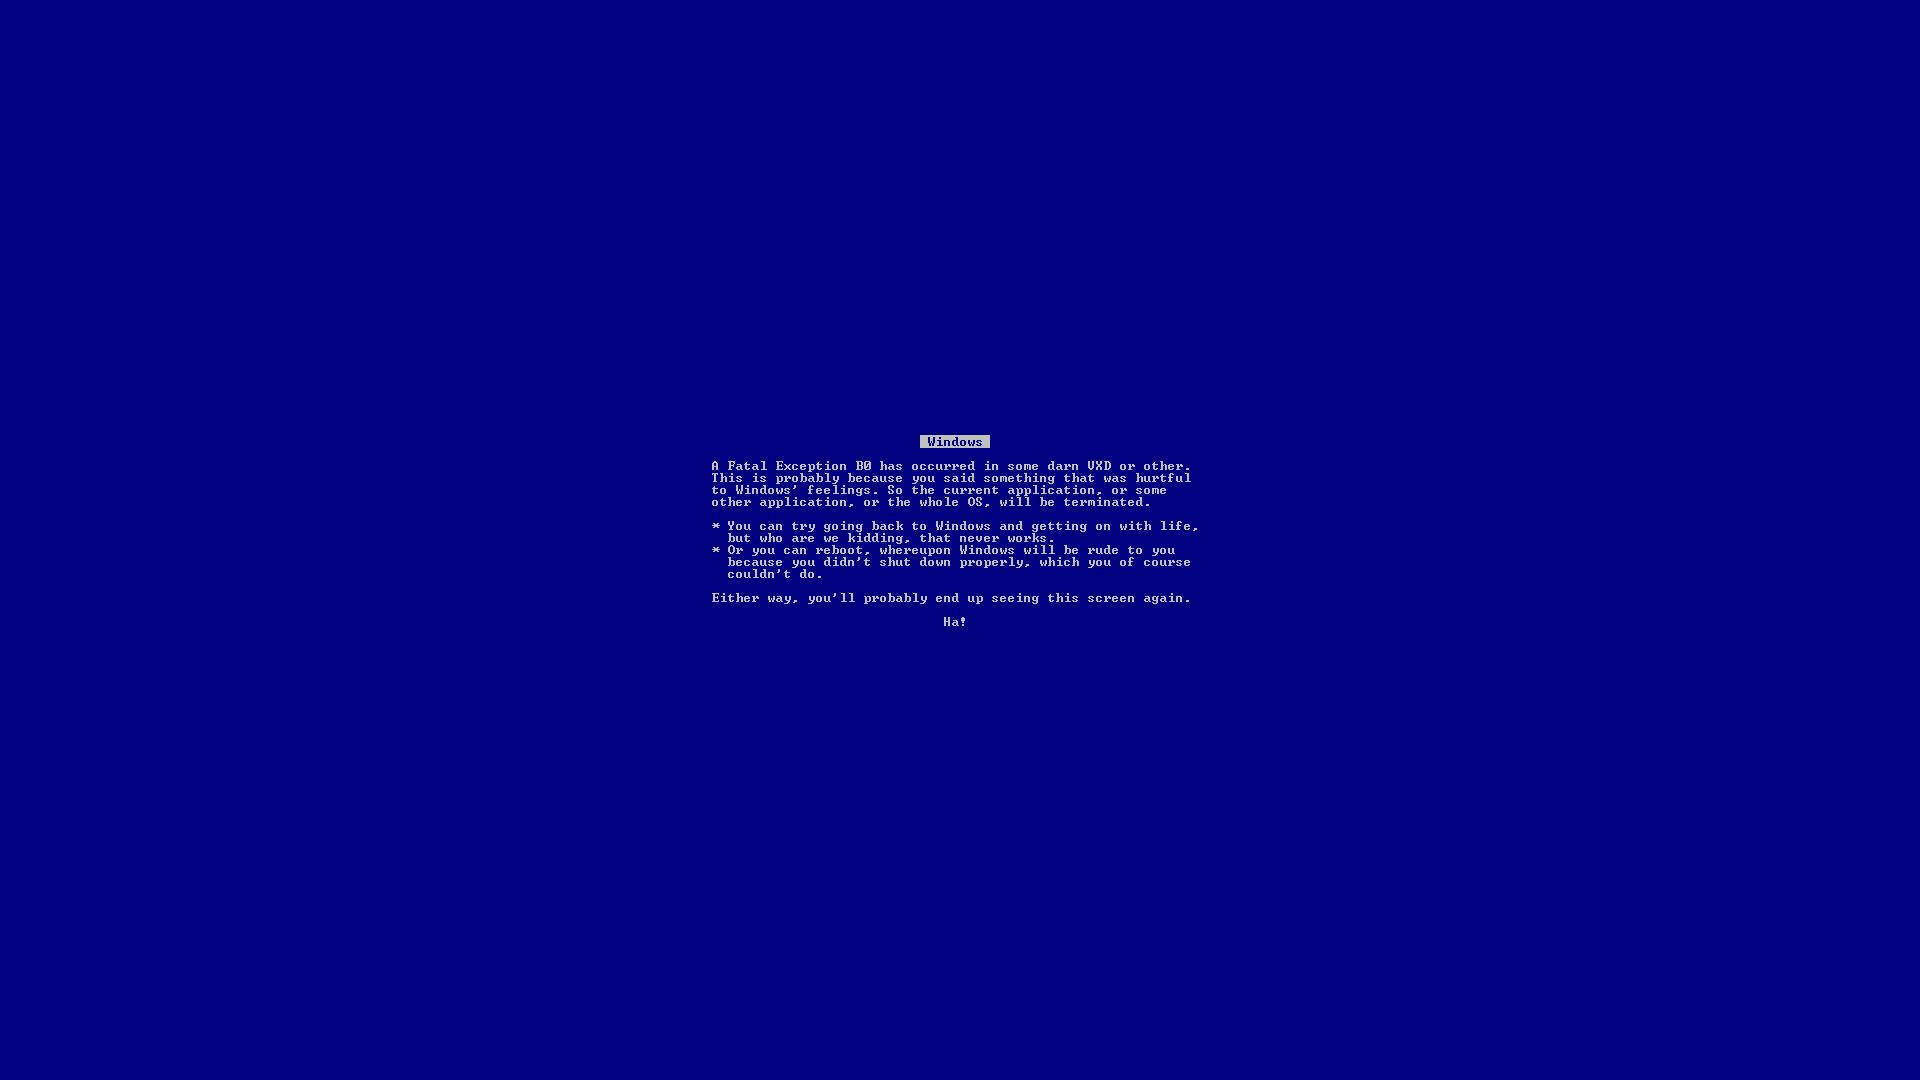 Windows 95 Bsod Background